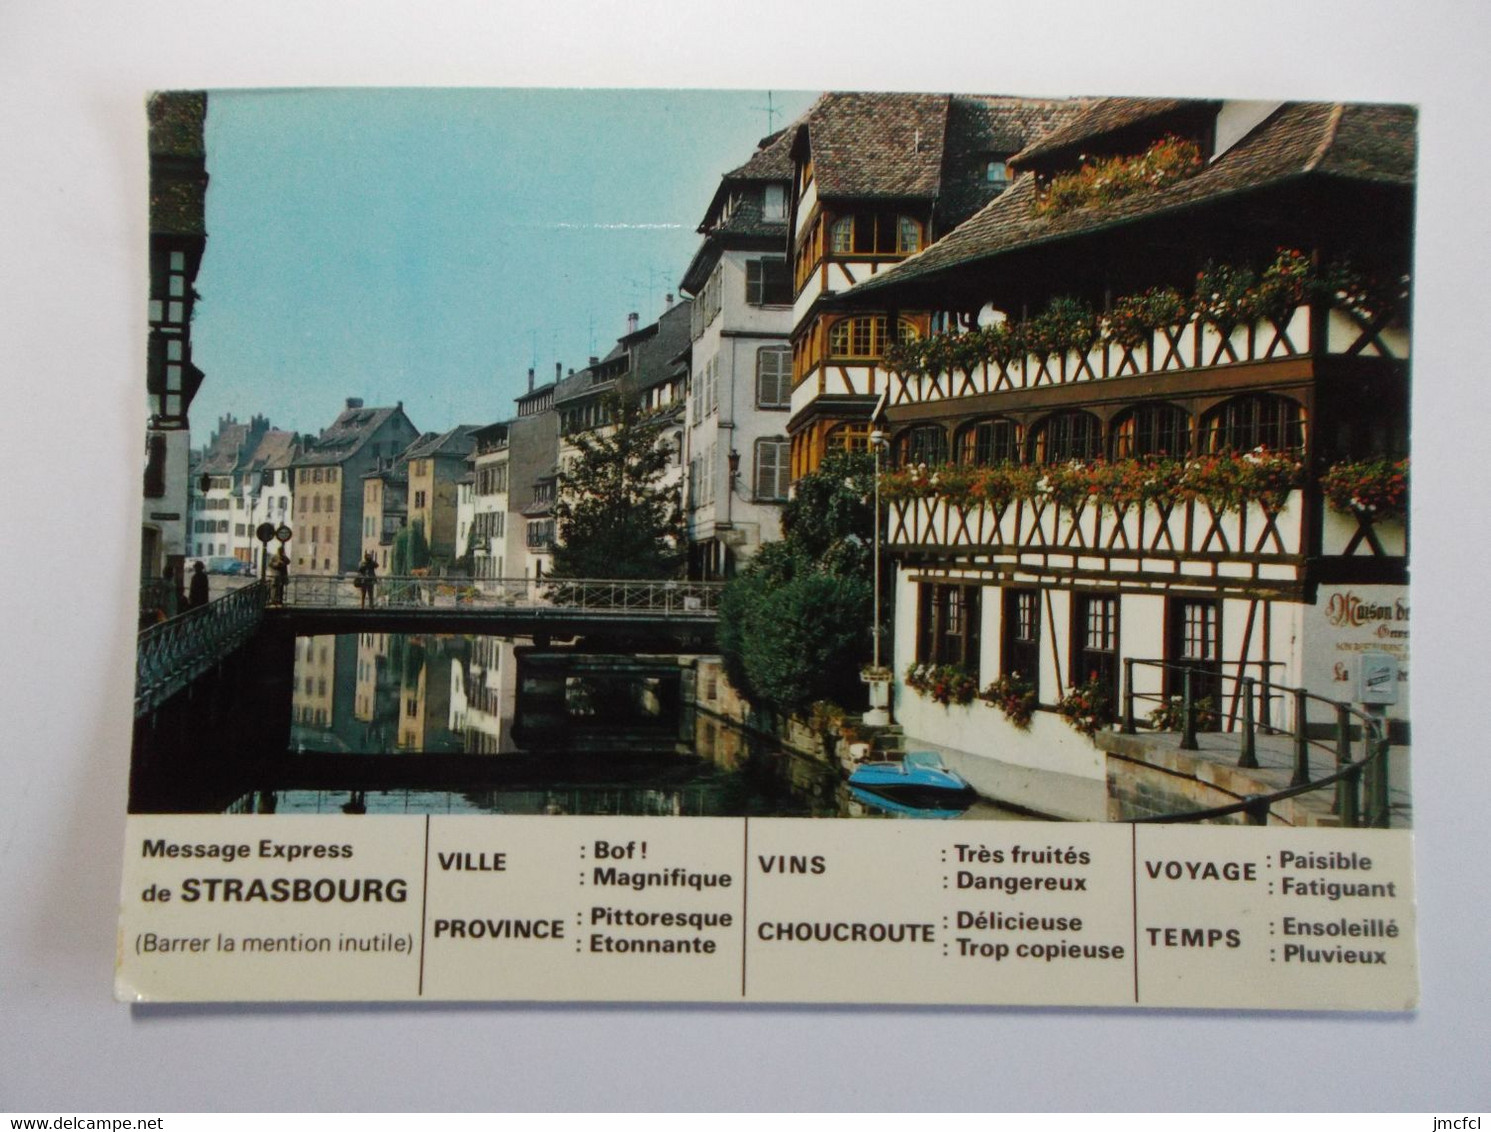 493 Cartes  de STRASBOURG (Lot (1-2-3) de Cartes de Strasbourg a 0.20 euros l'une